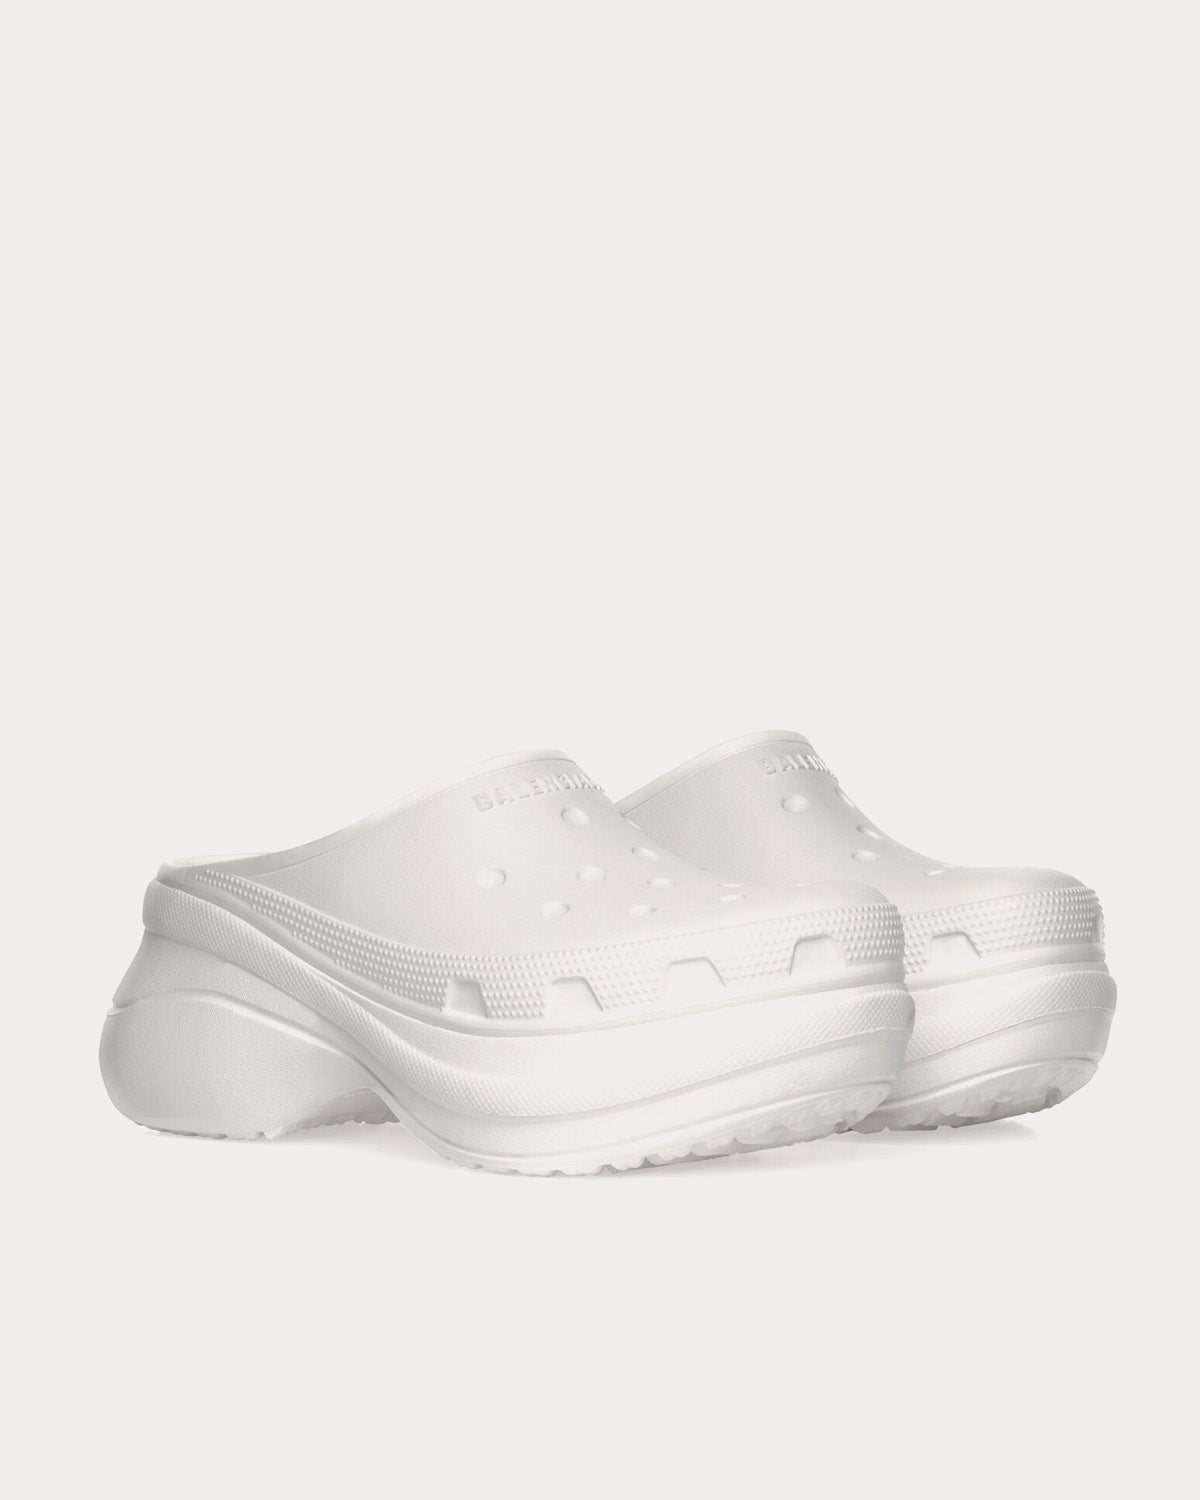 Balenciaga x Crocs - Rubber Mule White Slip Ons